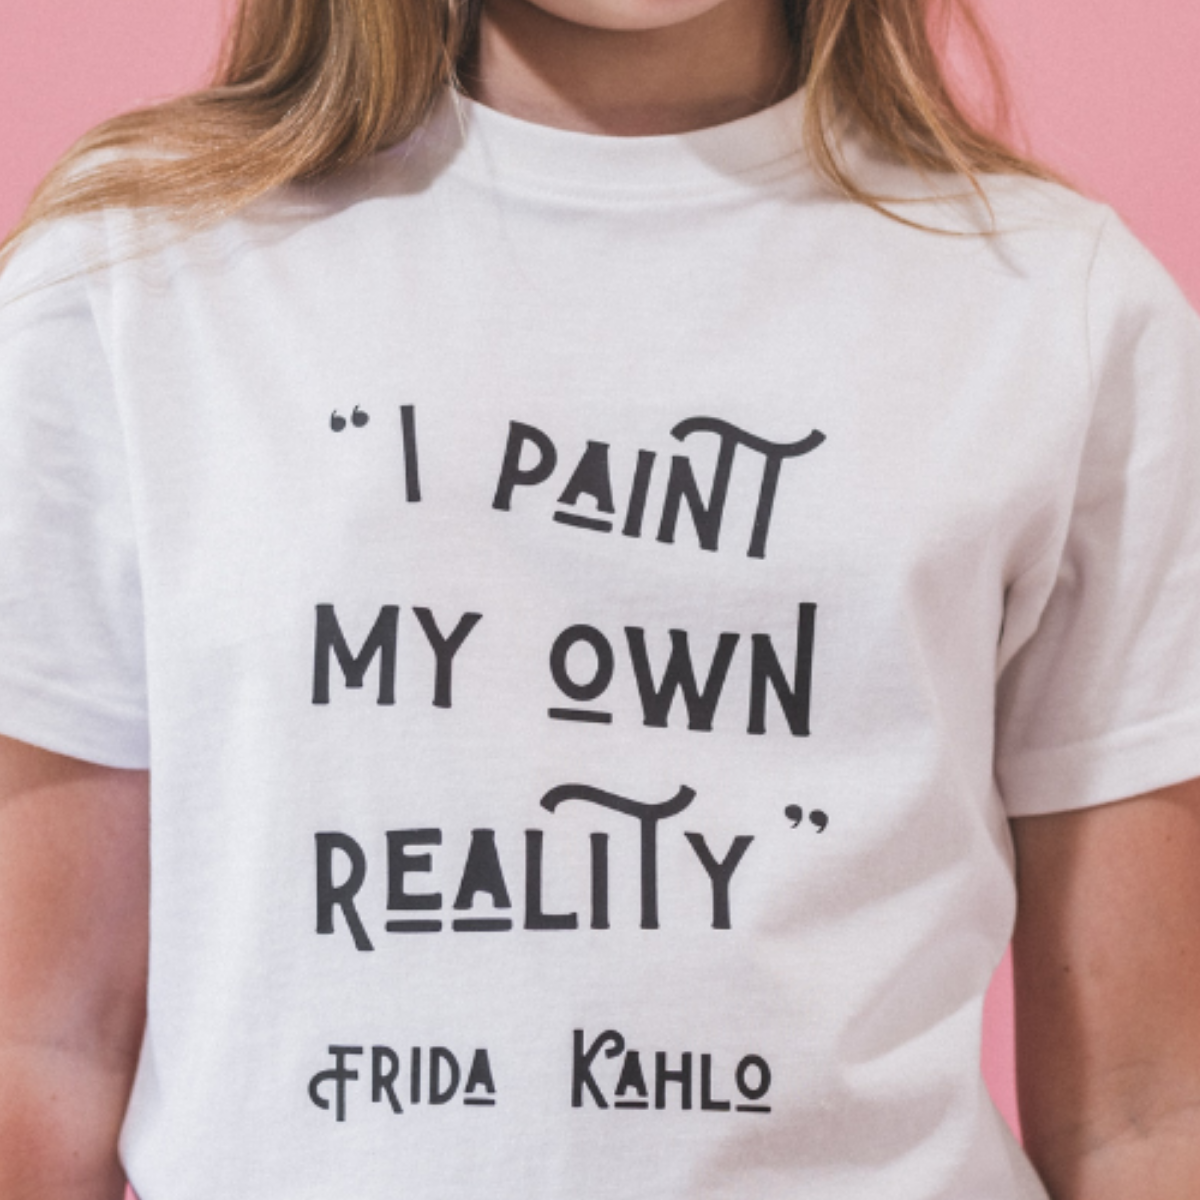 FRIDA KAHLO "I PAINT MY OWN REALITY" QUOTE Kids Organic T-Shirt : Black on White